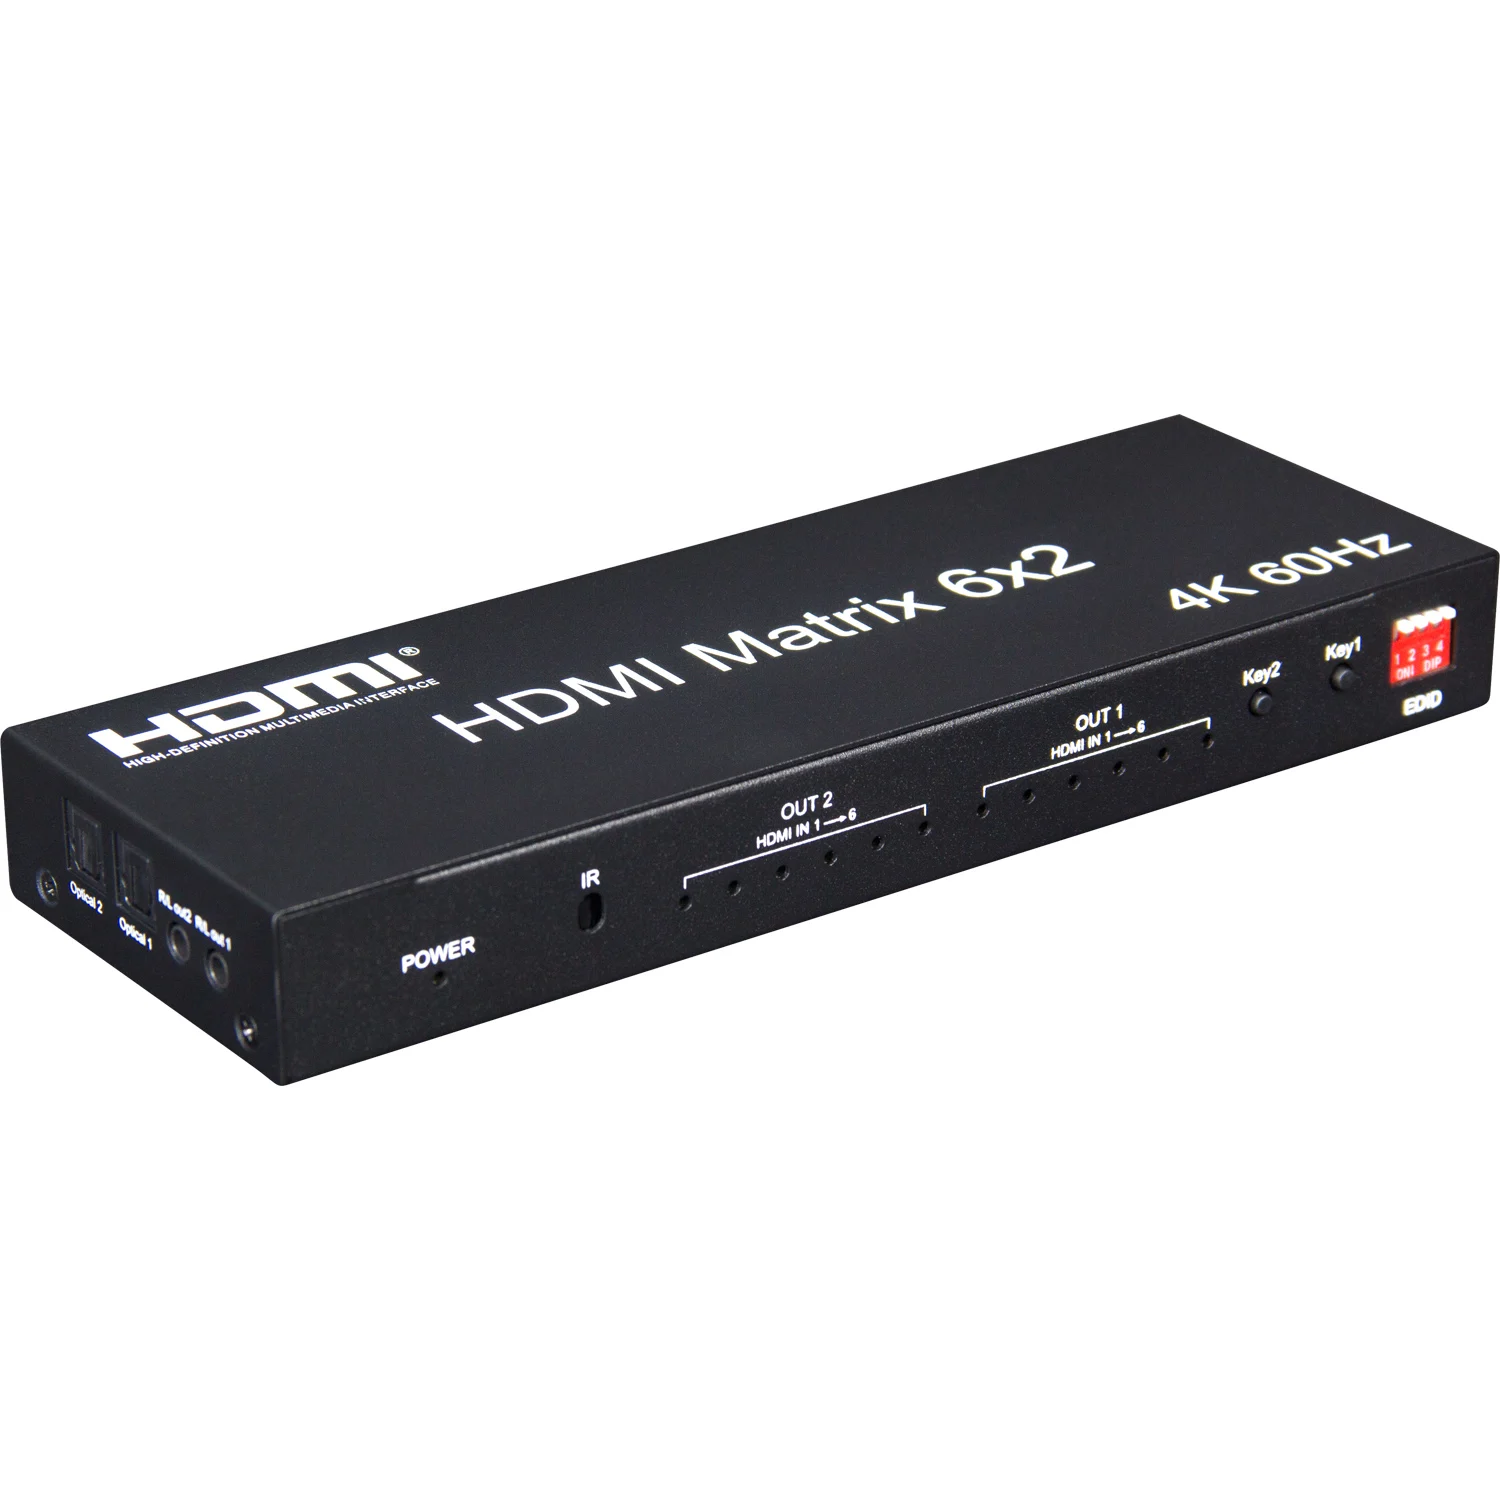 

4K@60hz 6x2 Matrix 6 IN 2 OUT HDMI Switch Splitter 4x2 HDMI Matrix Audio Video Converter for PS4 Xbox PC DVD To TV Dual Monitor